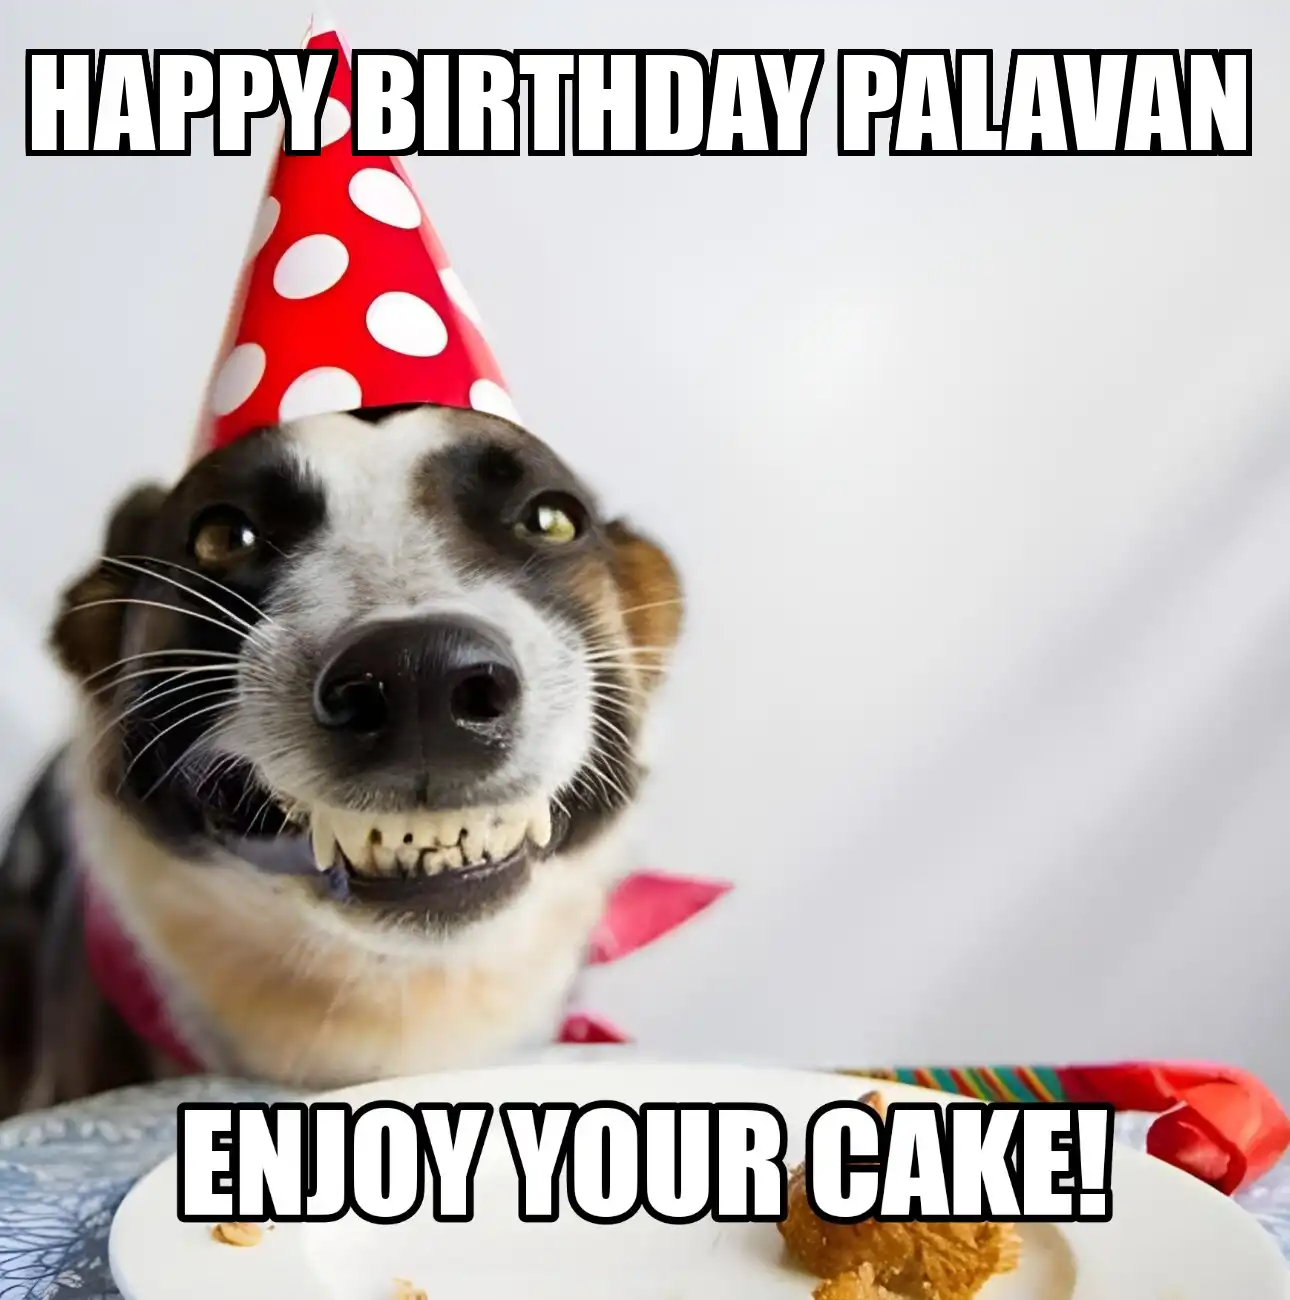 Happy Birthday Palavan Enjoy Your Cake Dog Meme